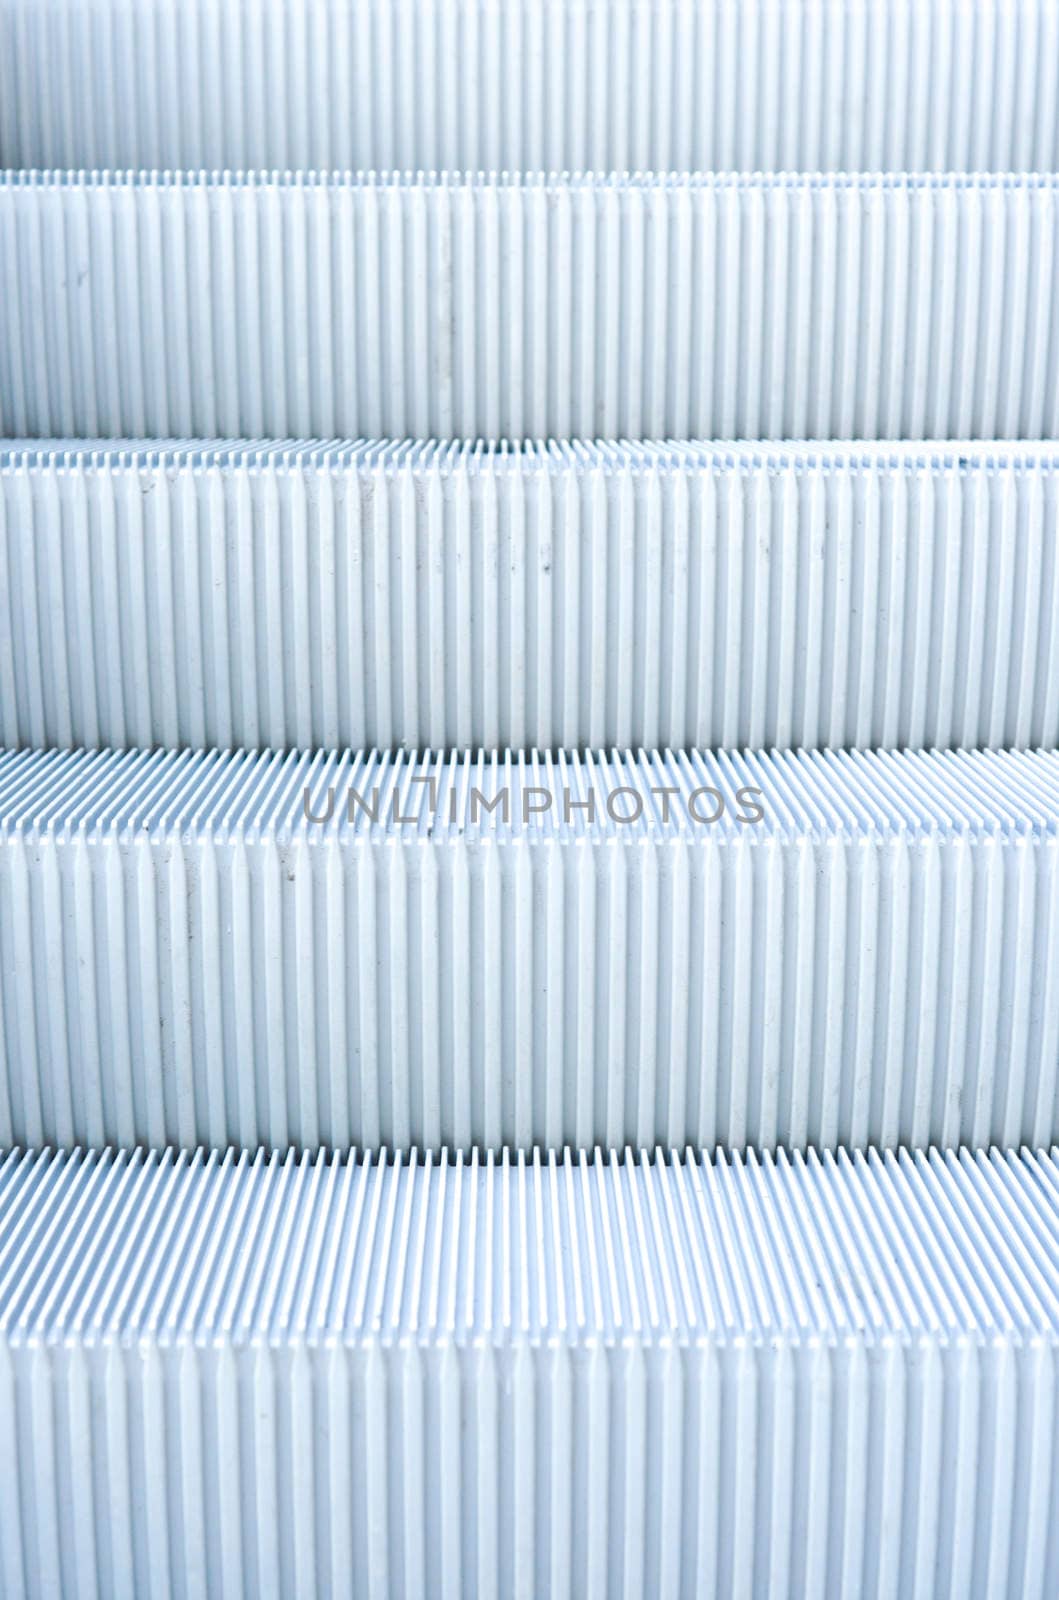  close up of escalator steps by vlaru